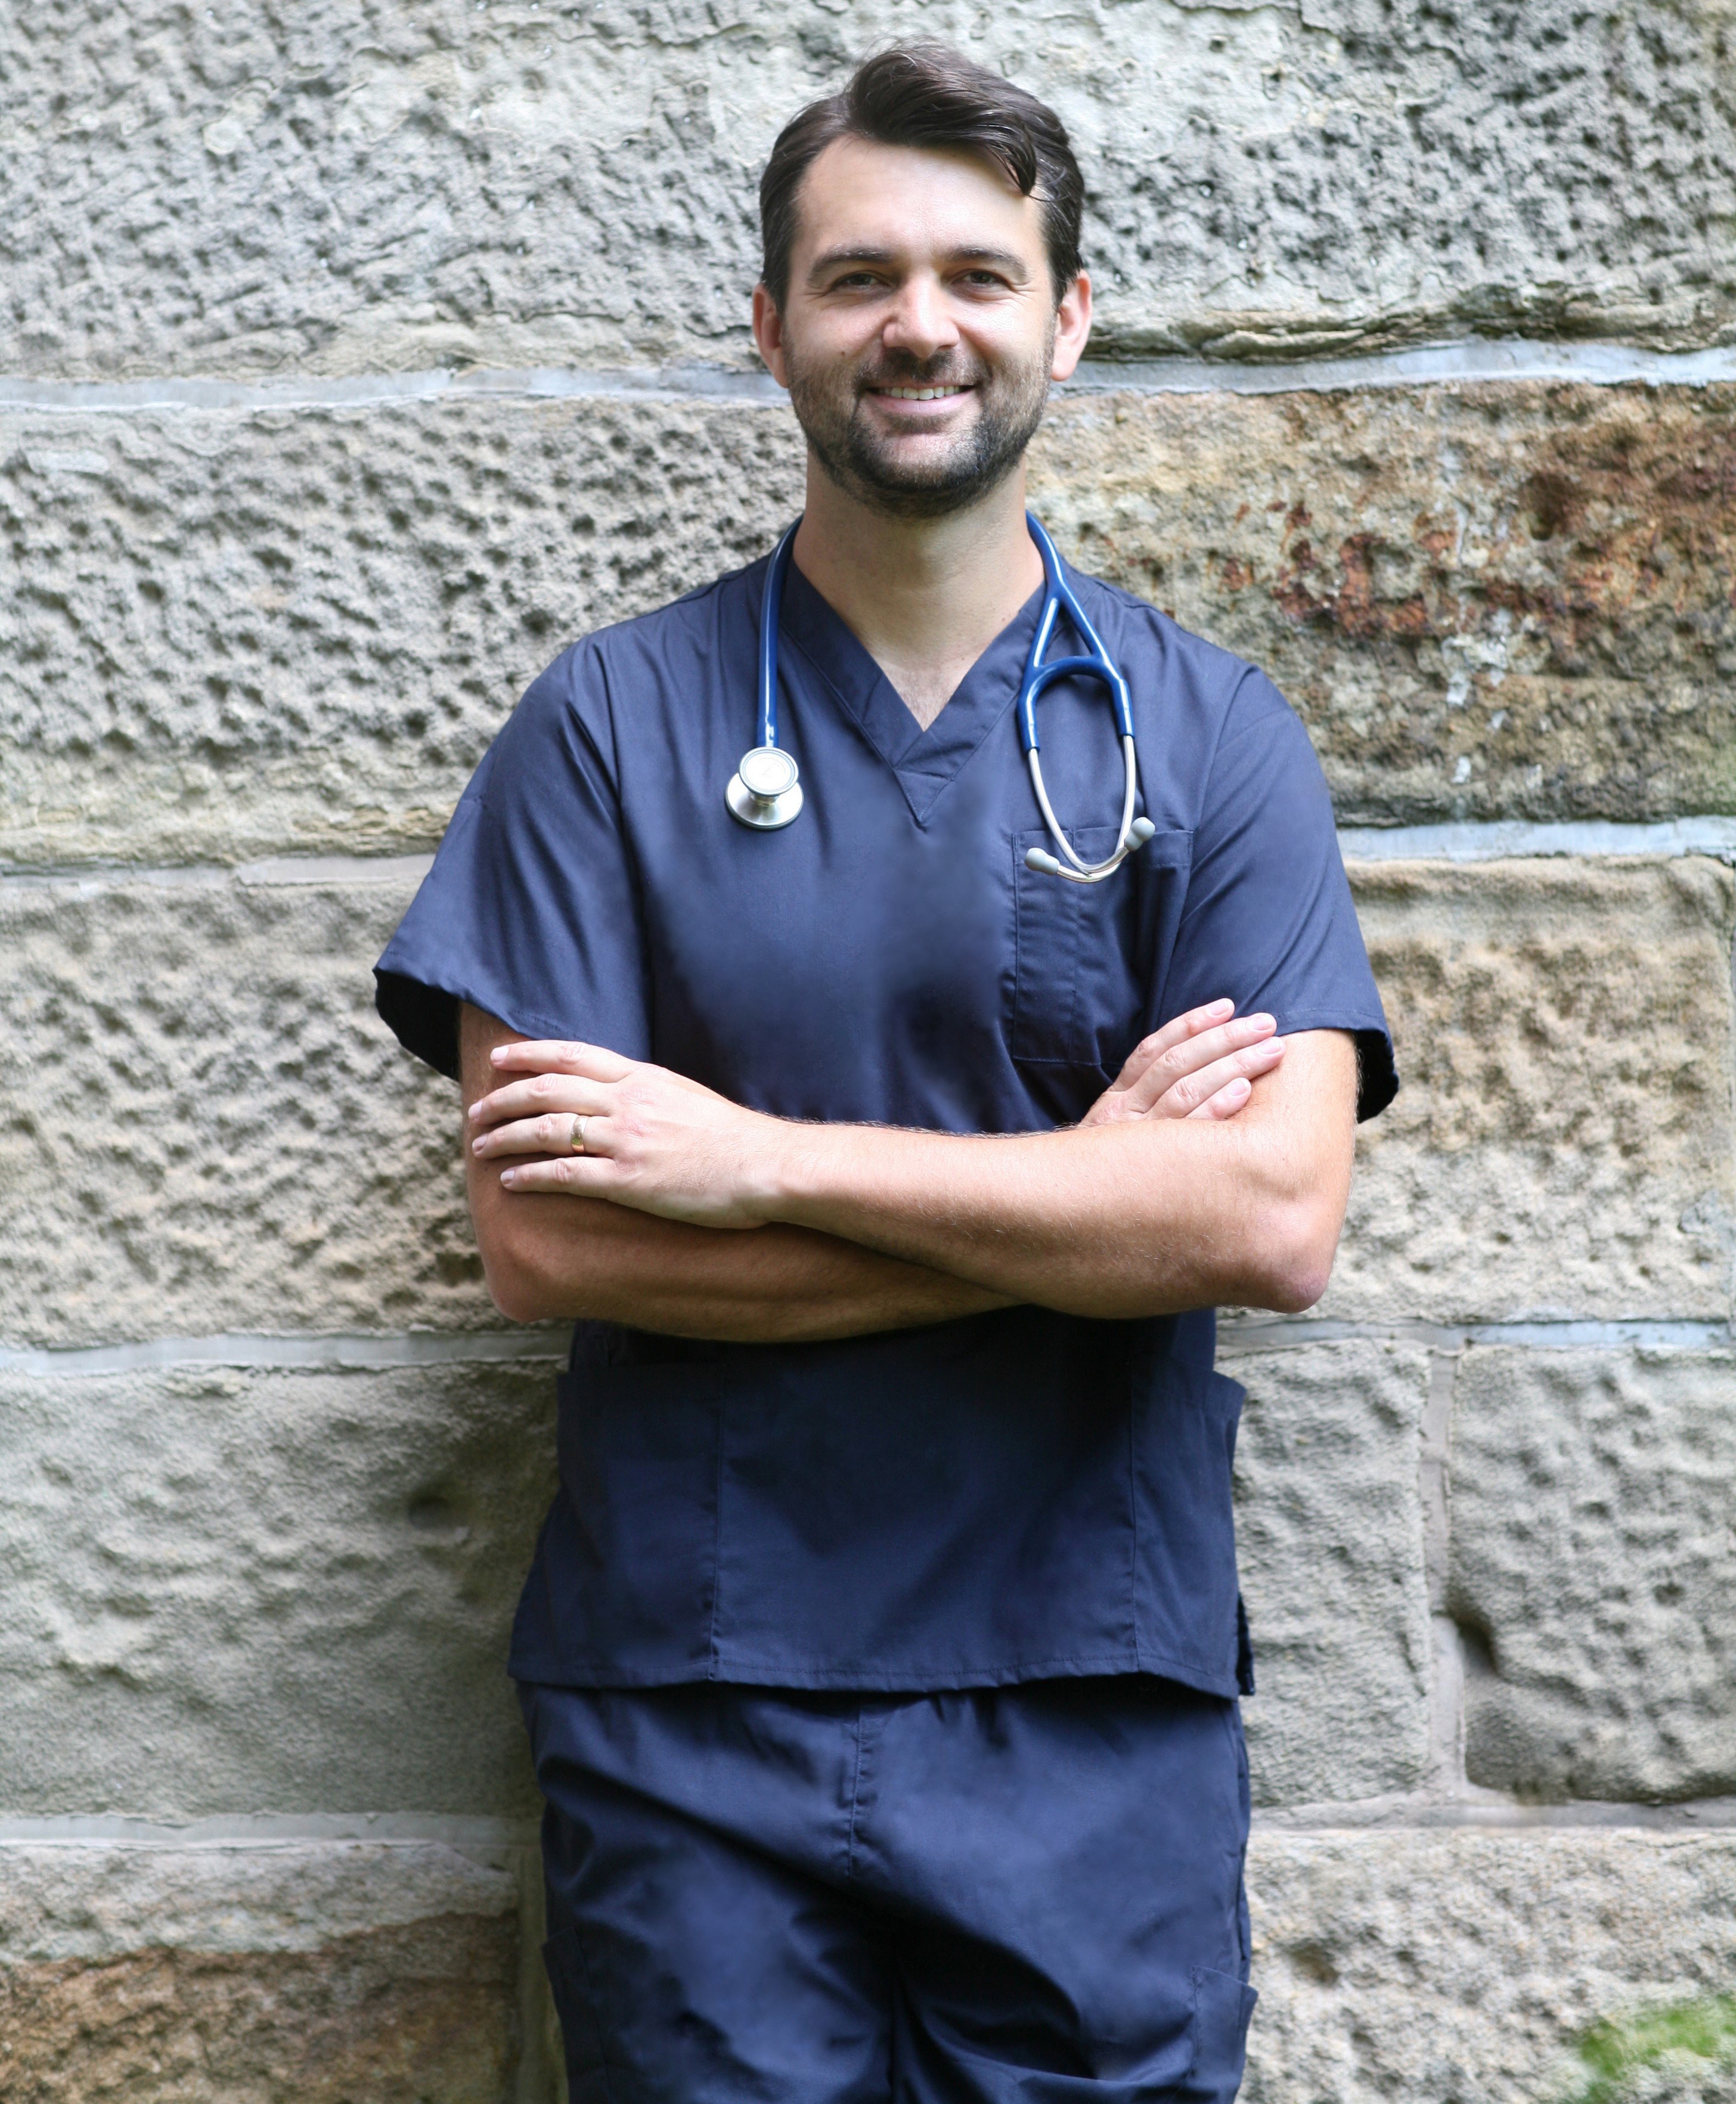 Dr-Ben-Bravery-photo-in-scrubs-edited-for-website.jpeg#asset:1699